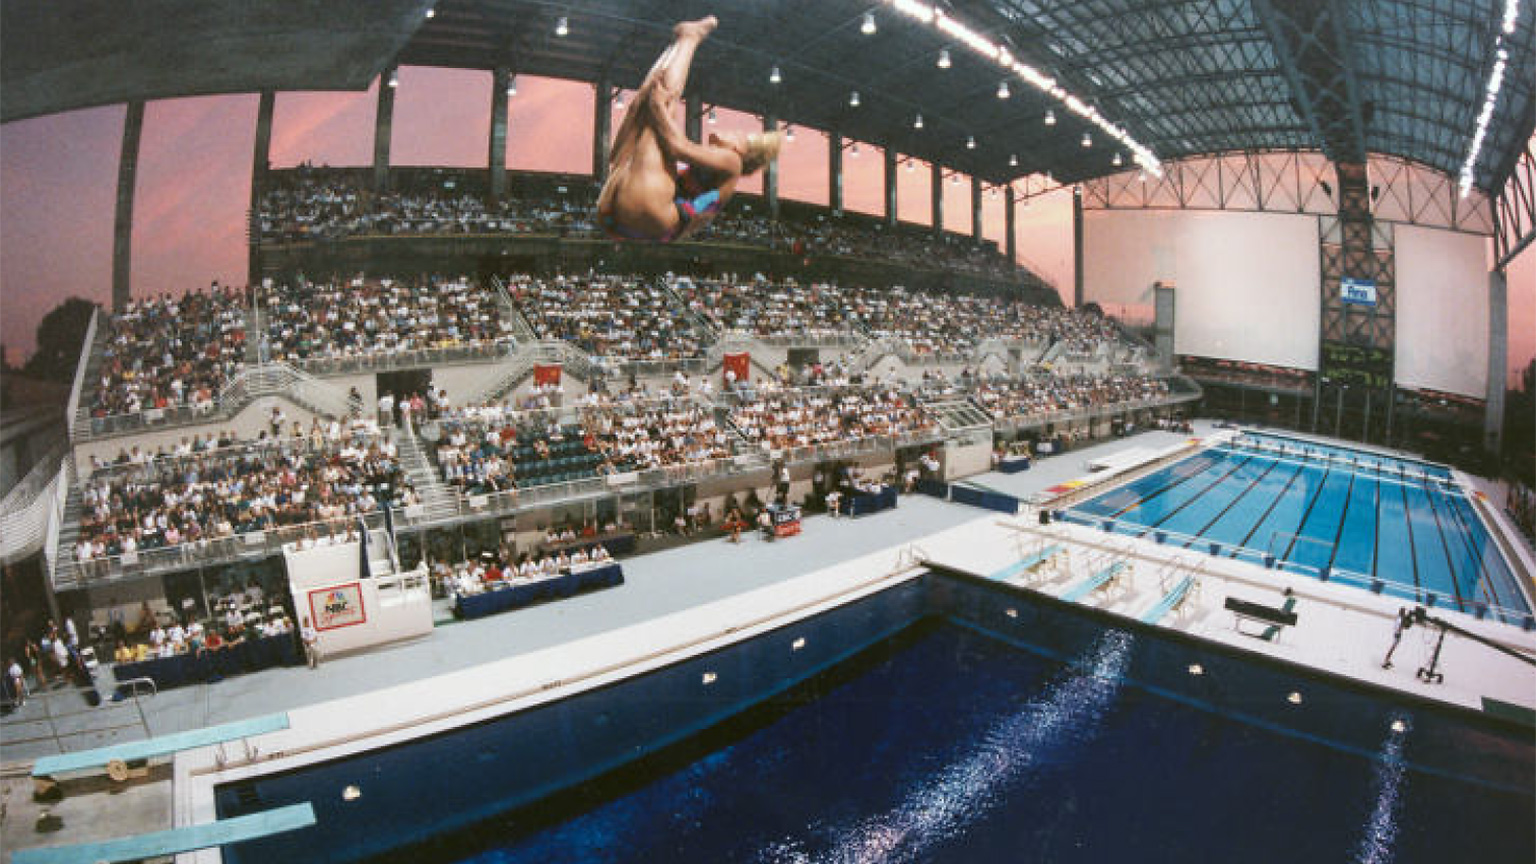 Georgia Tech Aquatic Center during the 1996 Olympic Games.